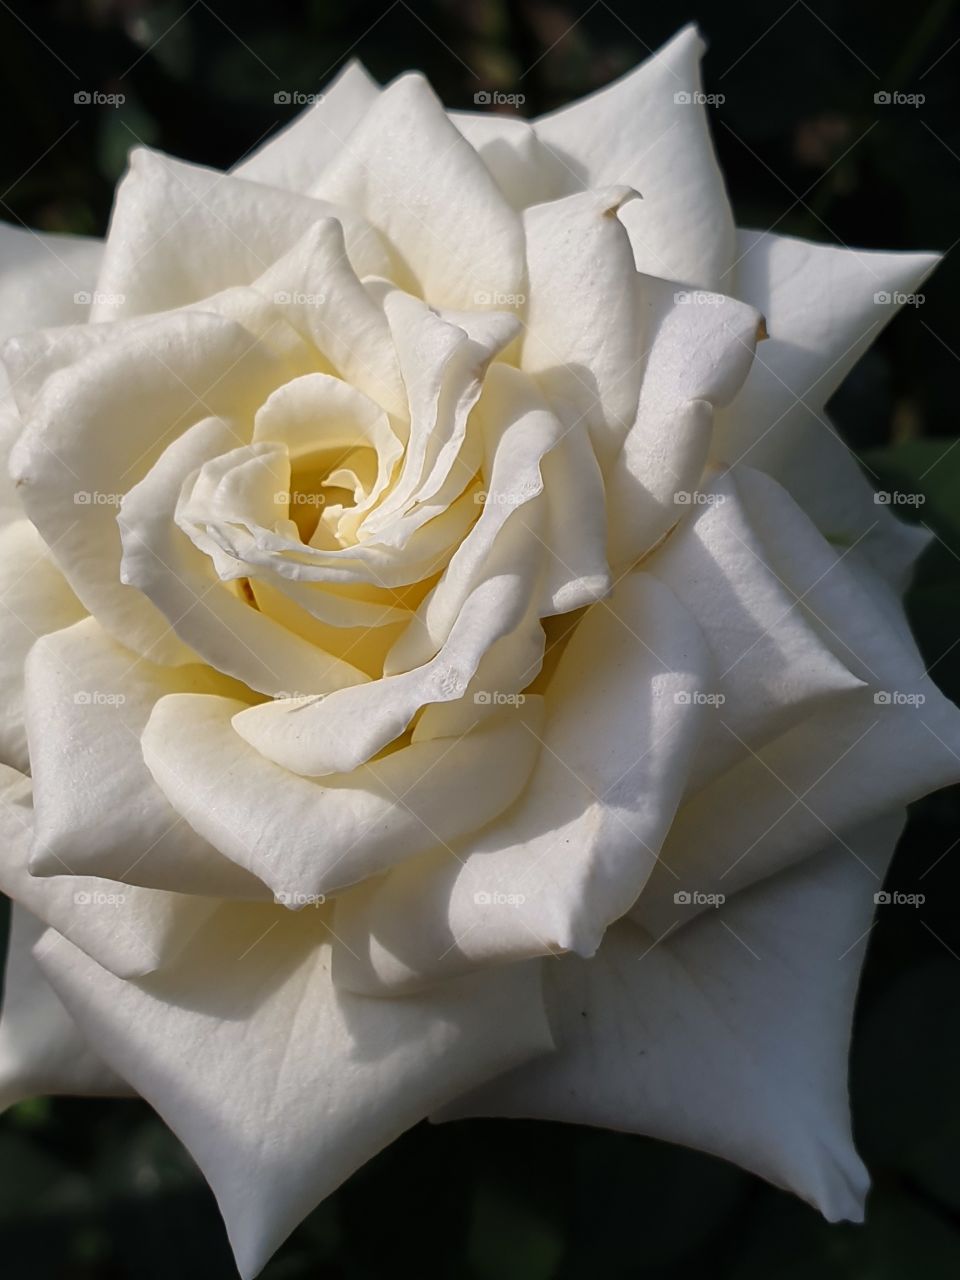 white rose closeup